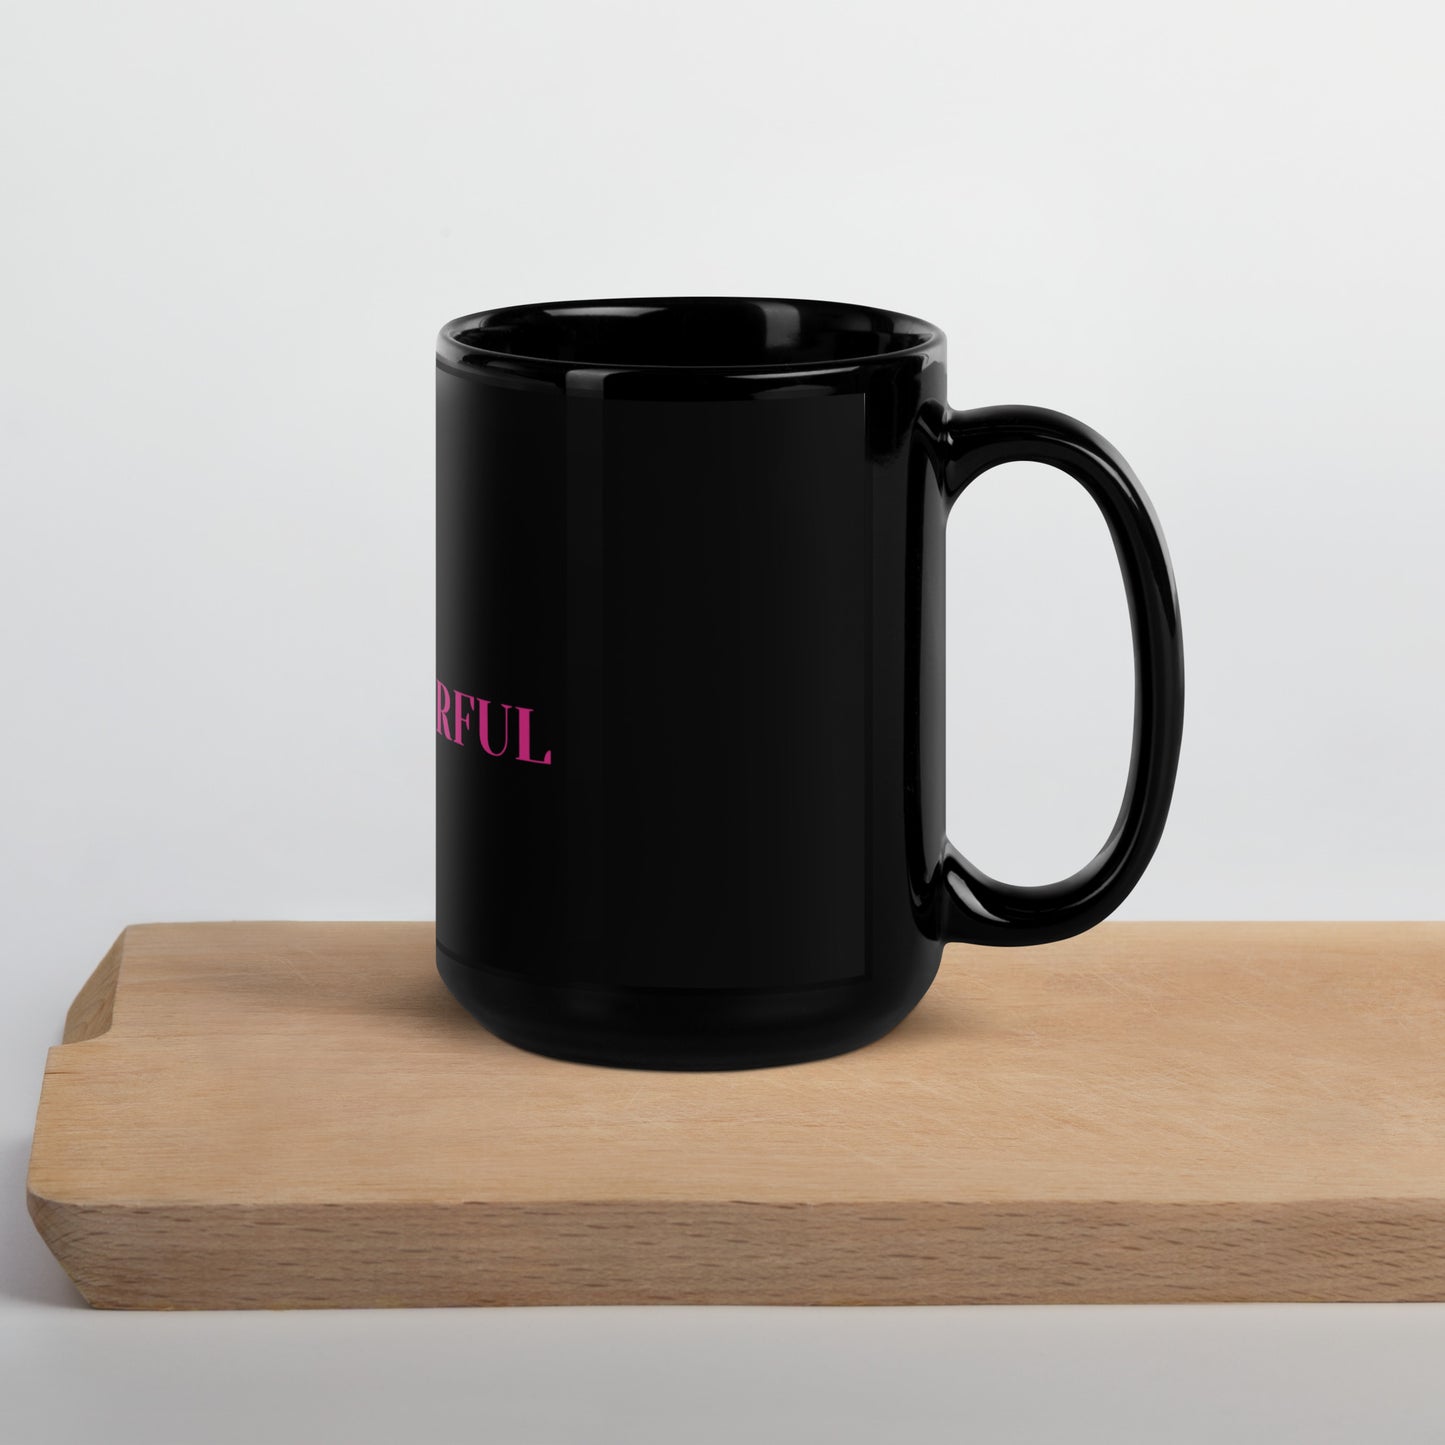 Pretty, Poised, Powerful Black Glossy Mug